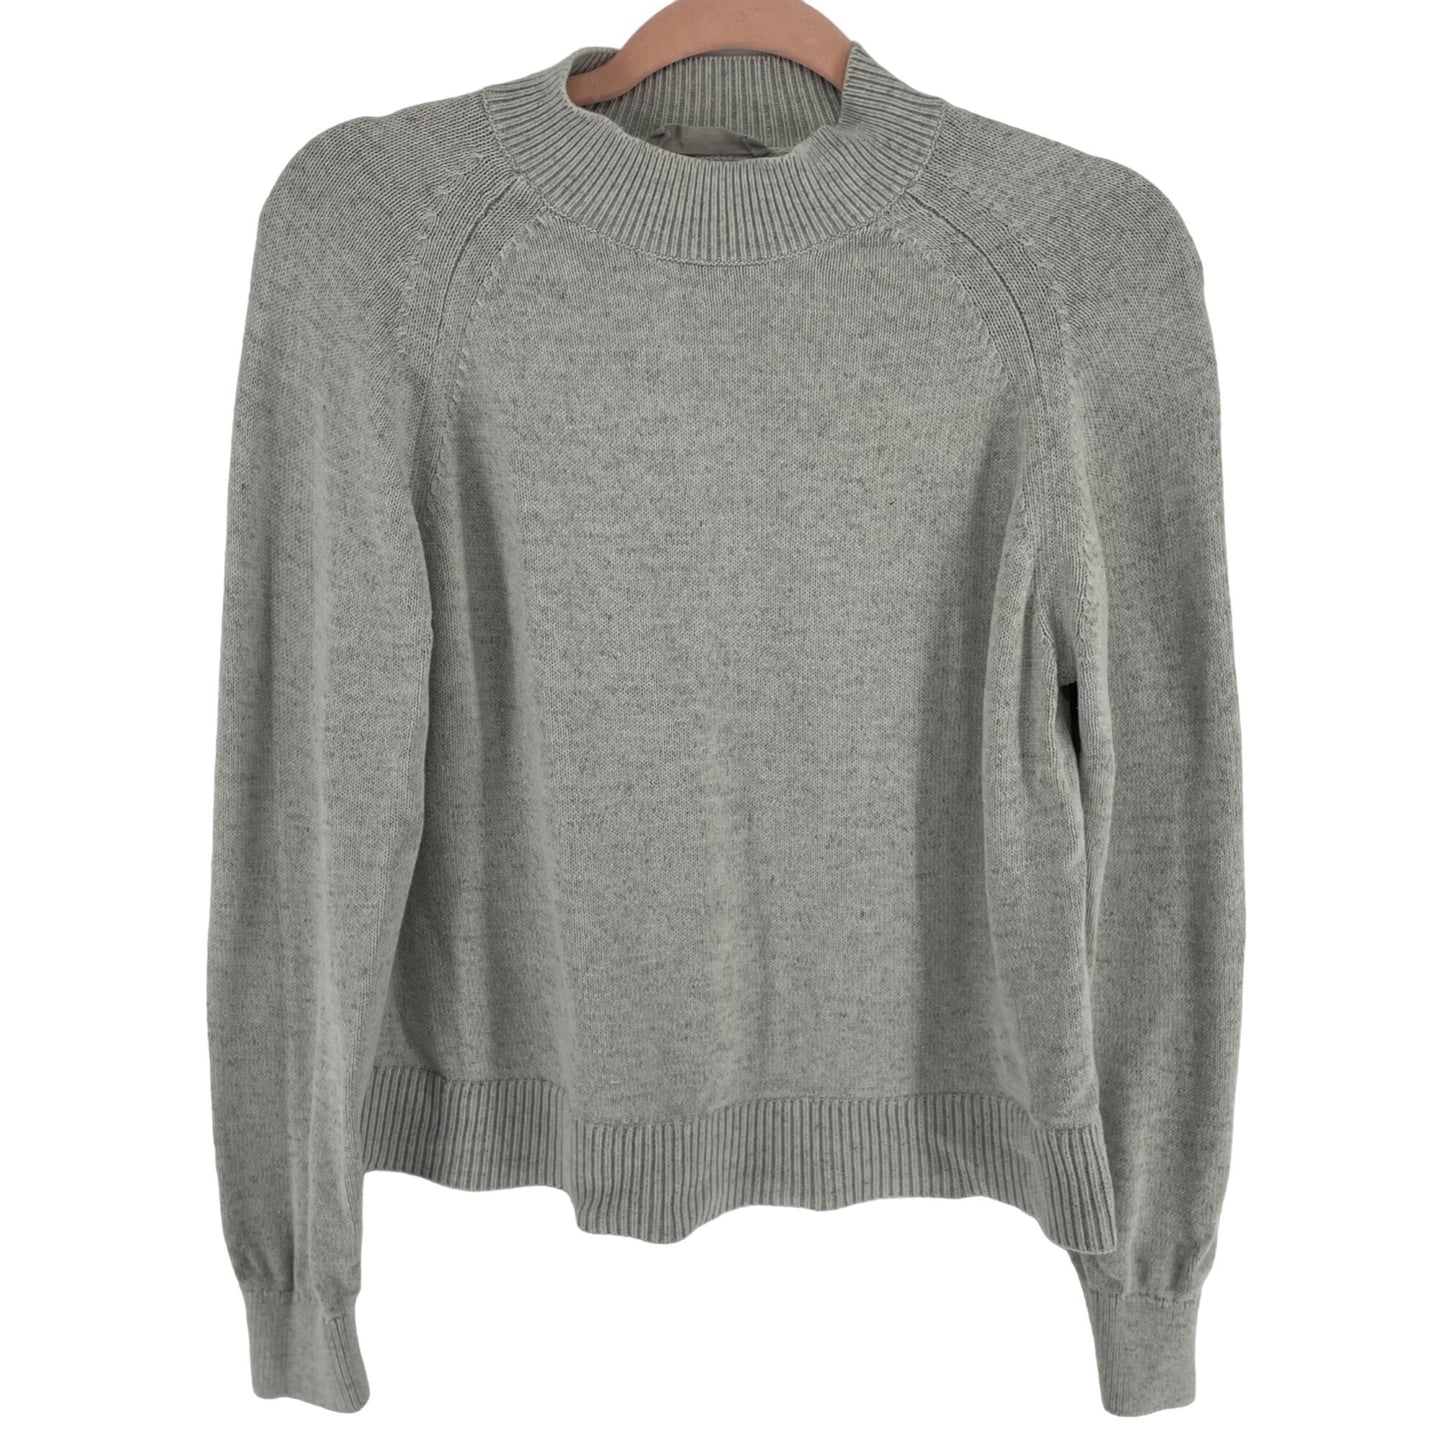 Everlane Women's Size Small Light Grey Sweater